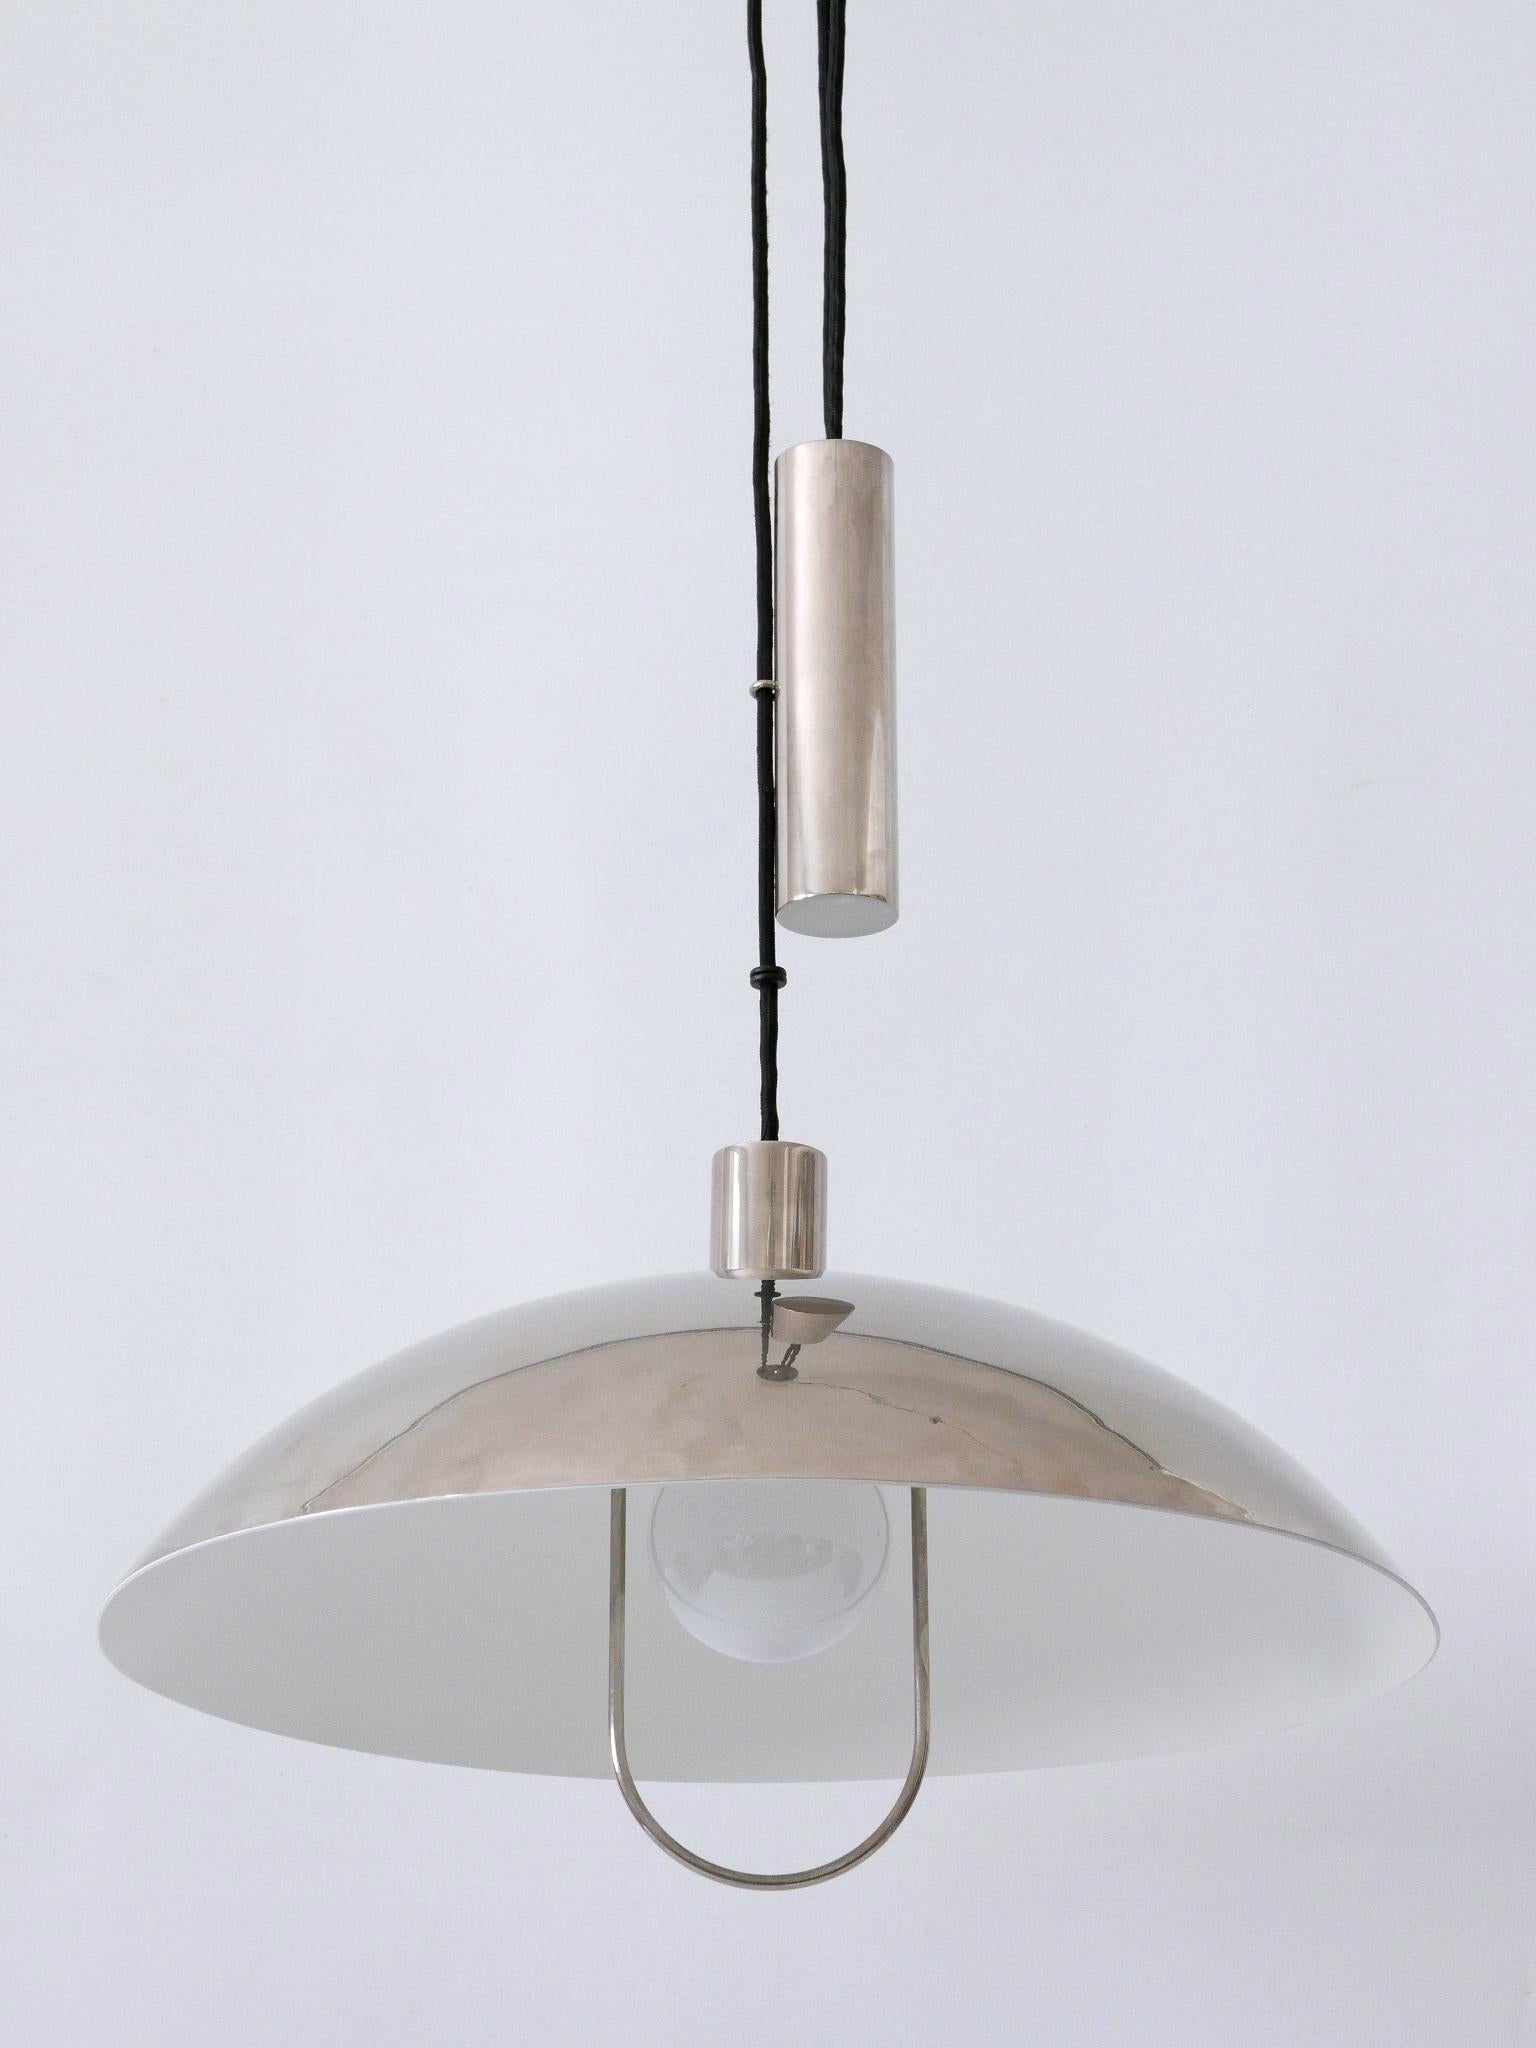 Early Tecnolumen Pendant Lamp 'Bauhaus HMB 25/500' by Marianne Brandt 1980s For Sale 7